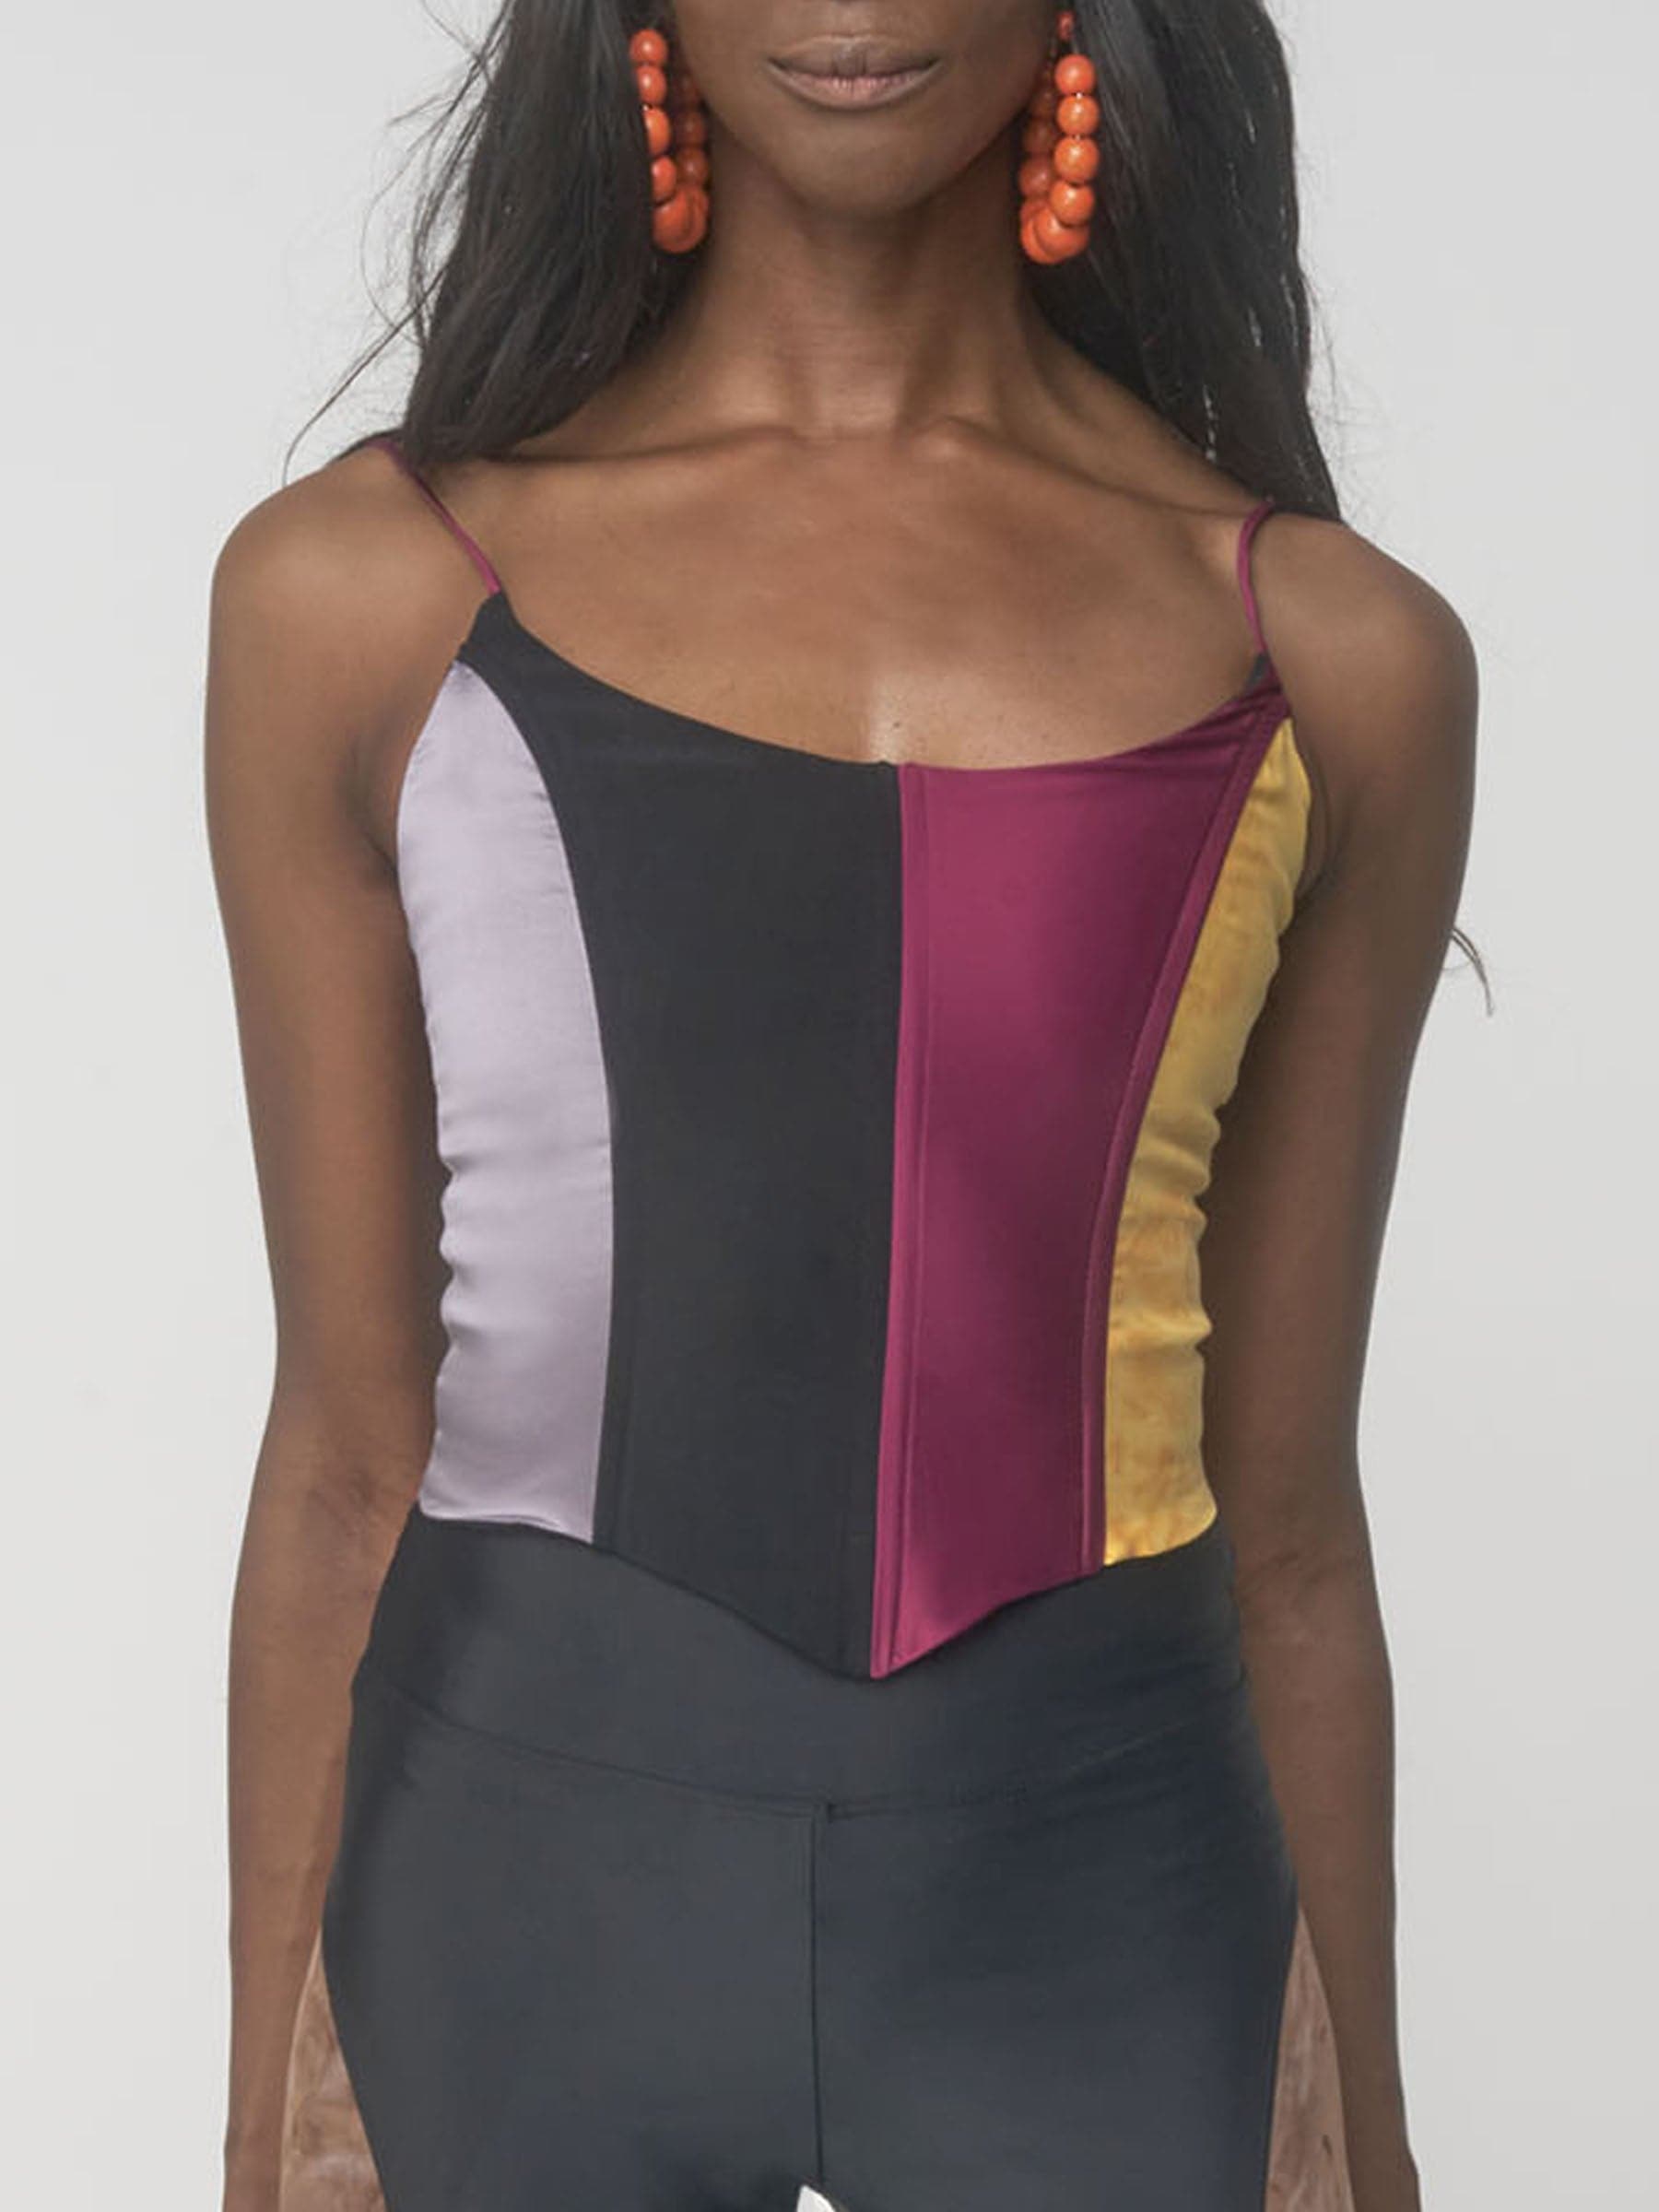 Colorblocked corset